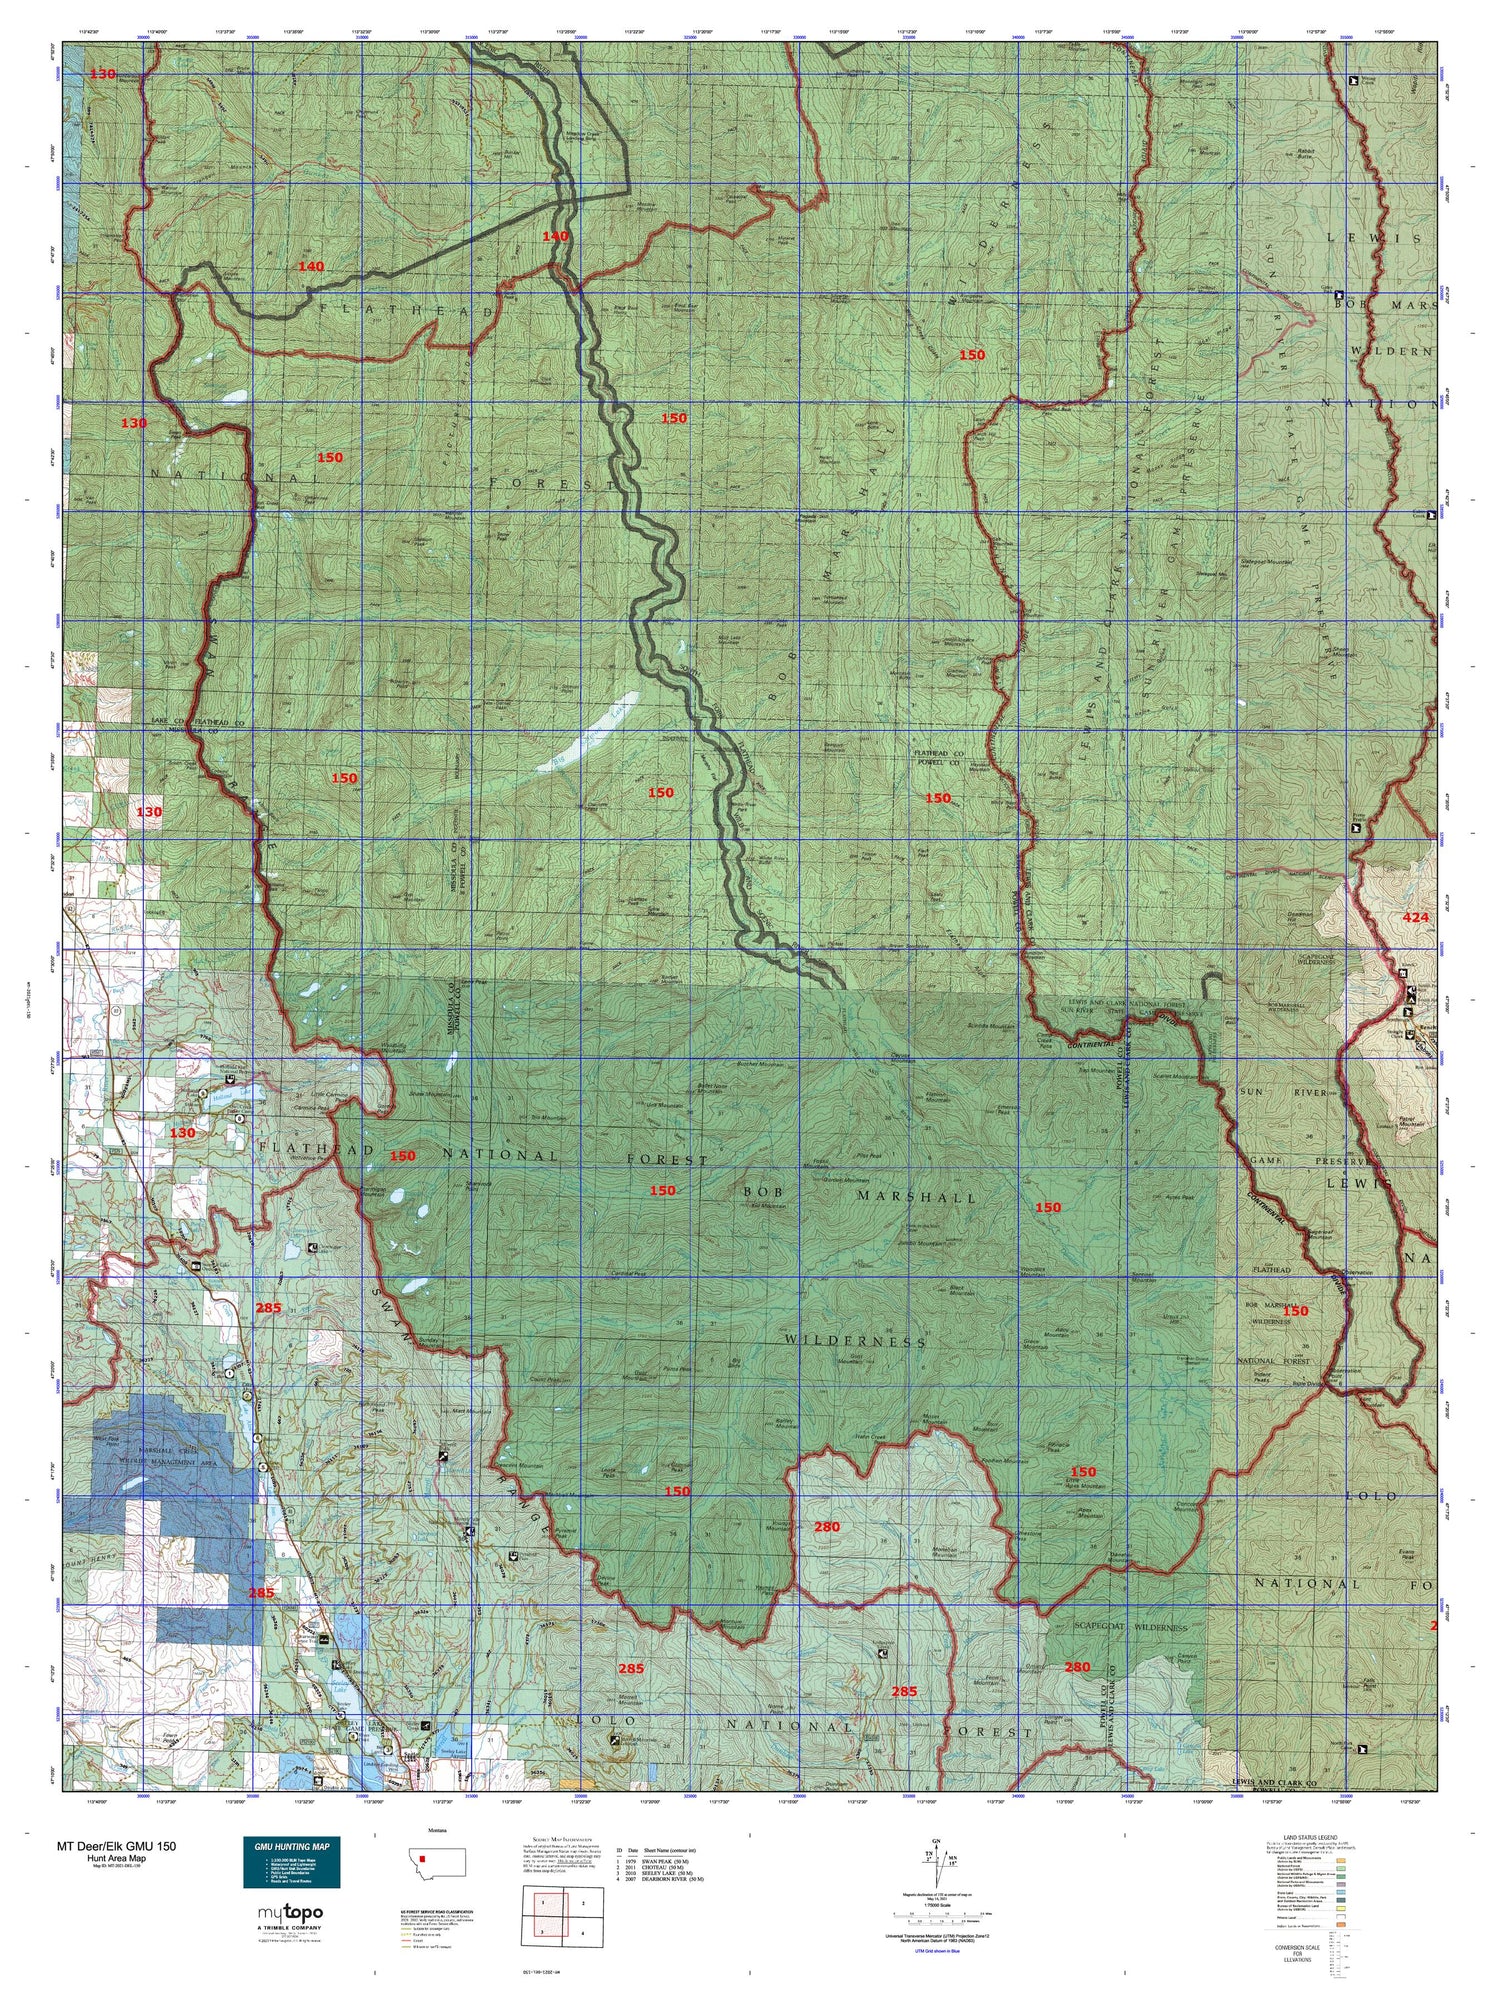 Montana Deer/Elk GMU 150 Map Image